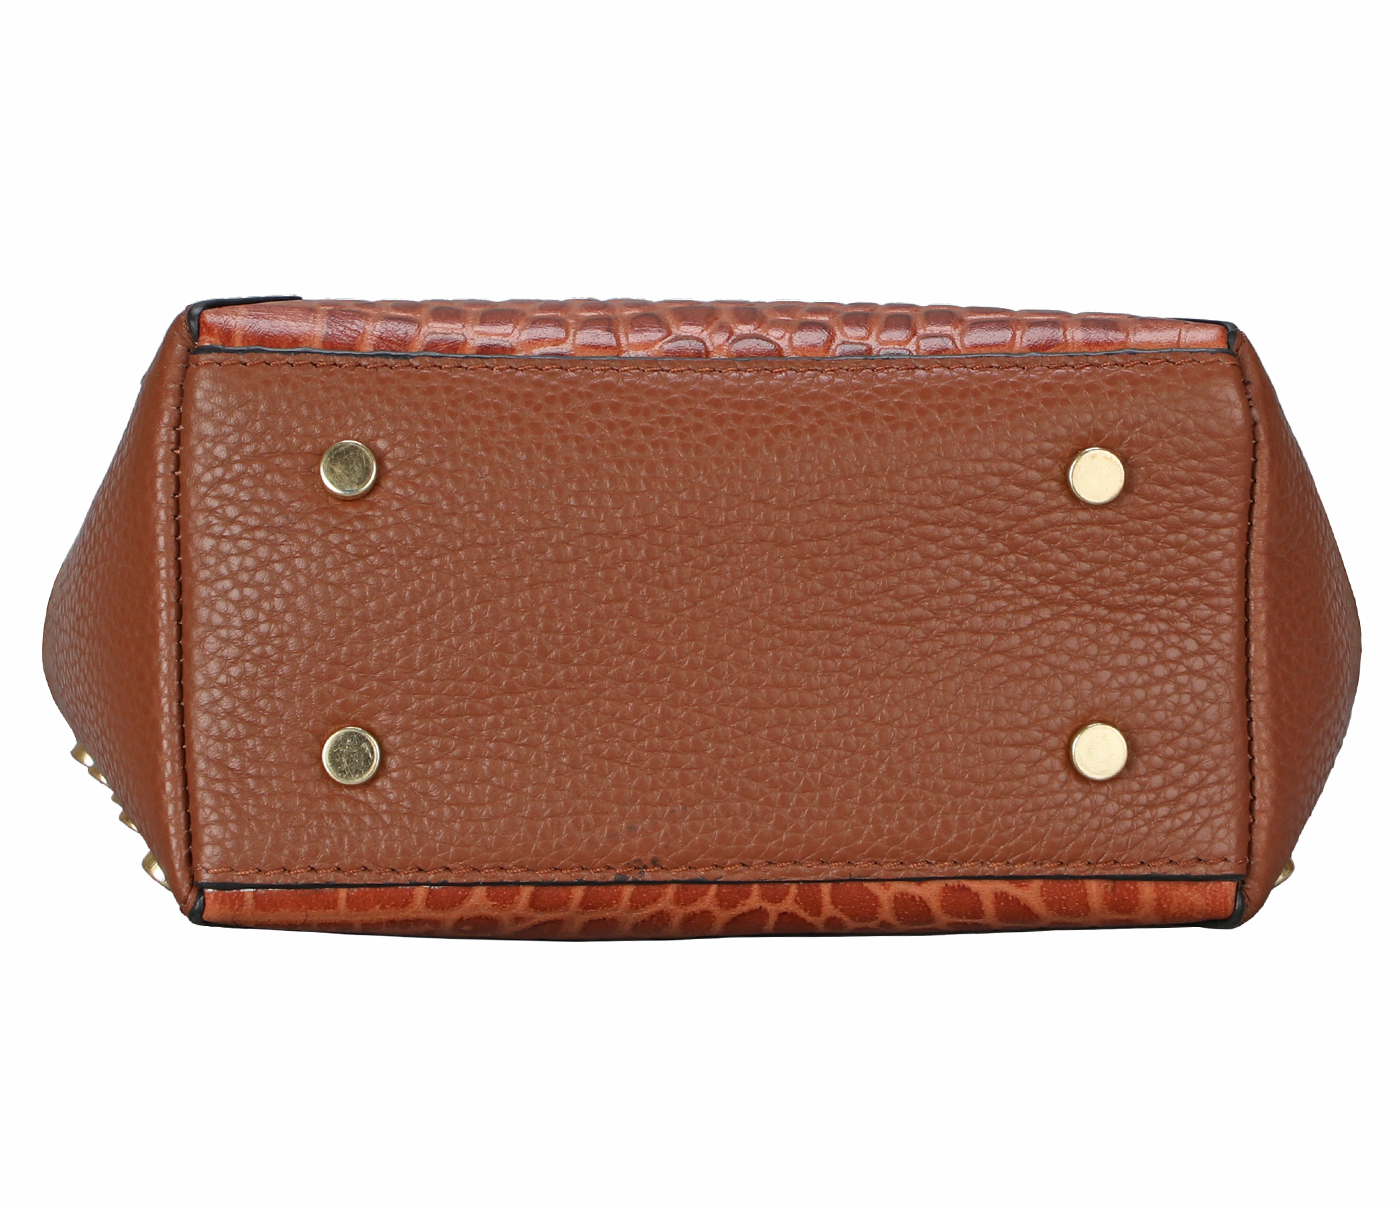 B876-Valencia-Shoulder work bag in Genuine Leather - Tan